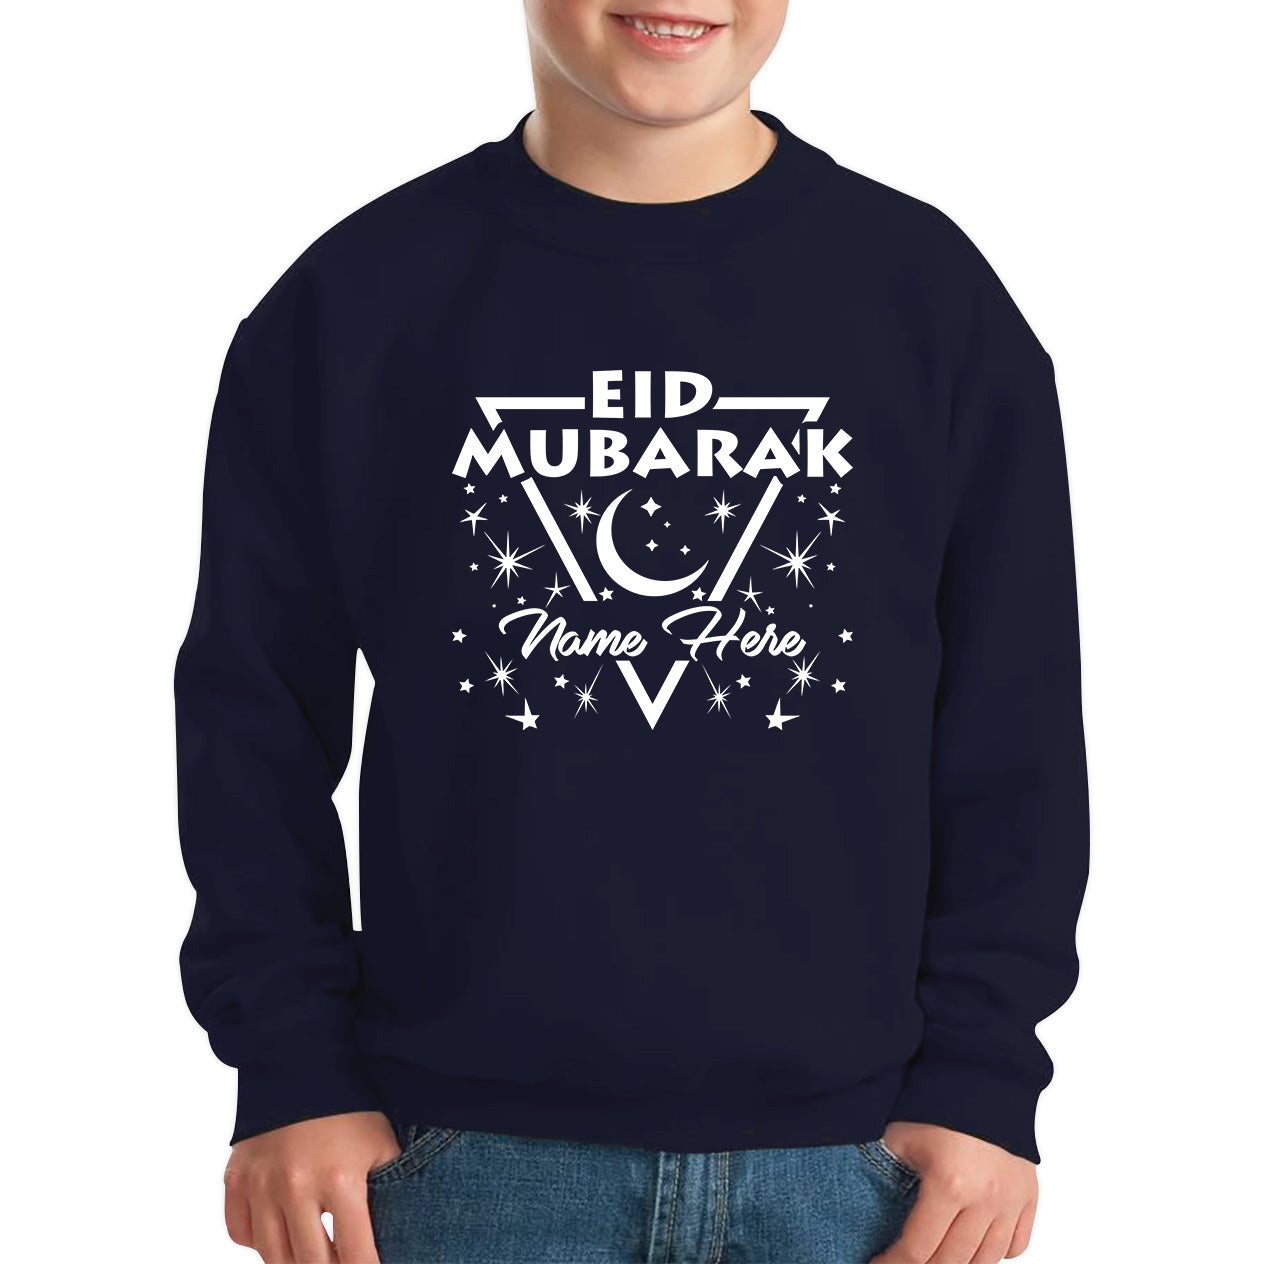 Eid Mubarak T-shirt's  Shirts, T shirt, Eid mubarak